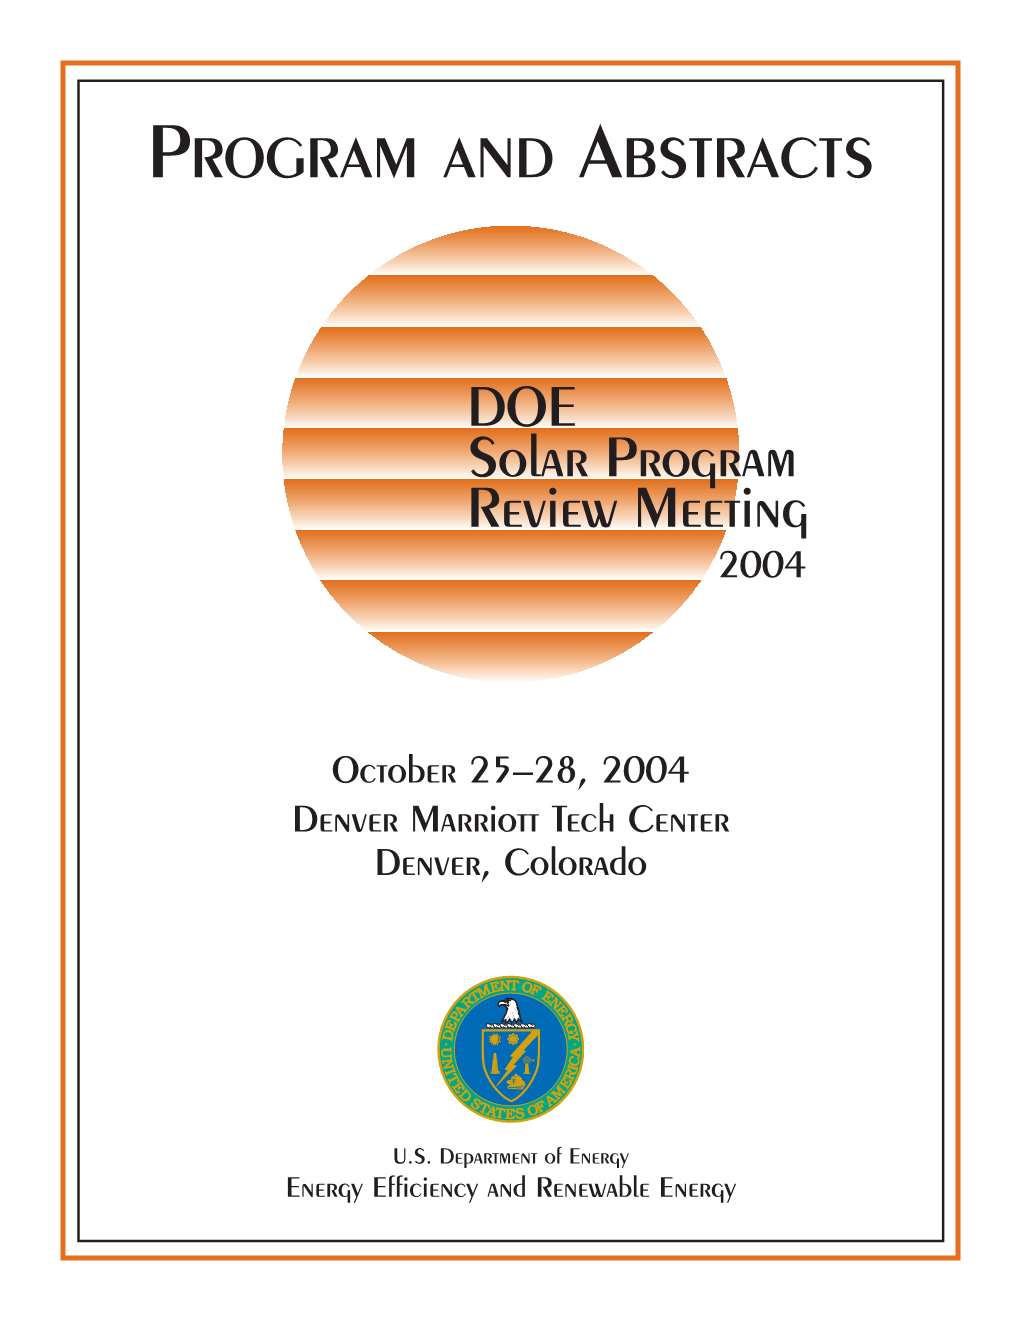 DOE Solar Program Review Meeting 2004